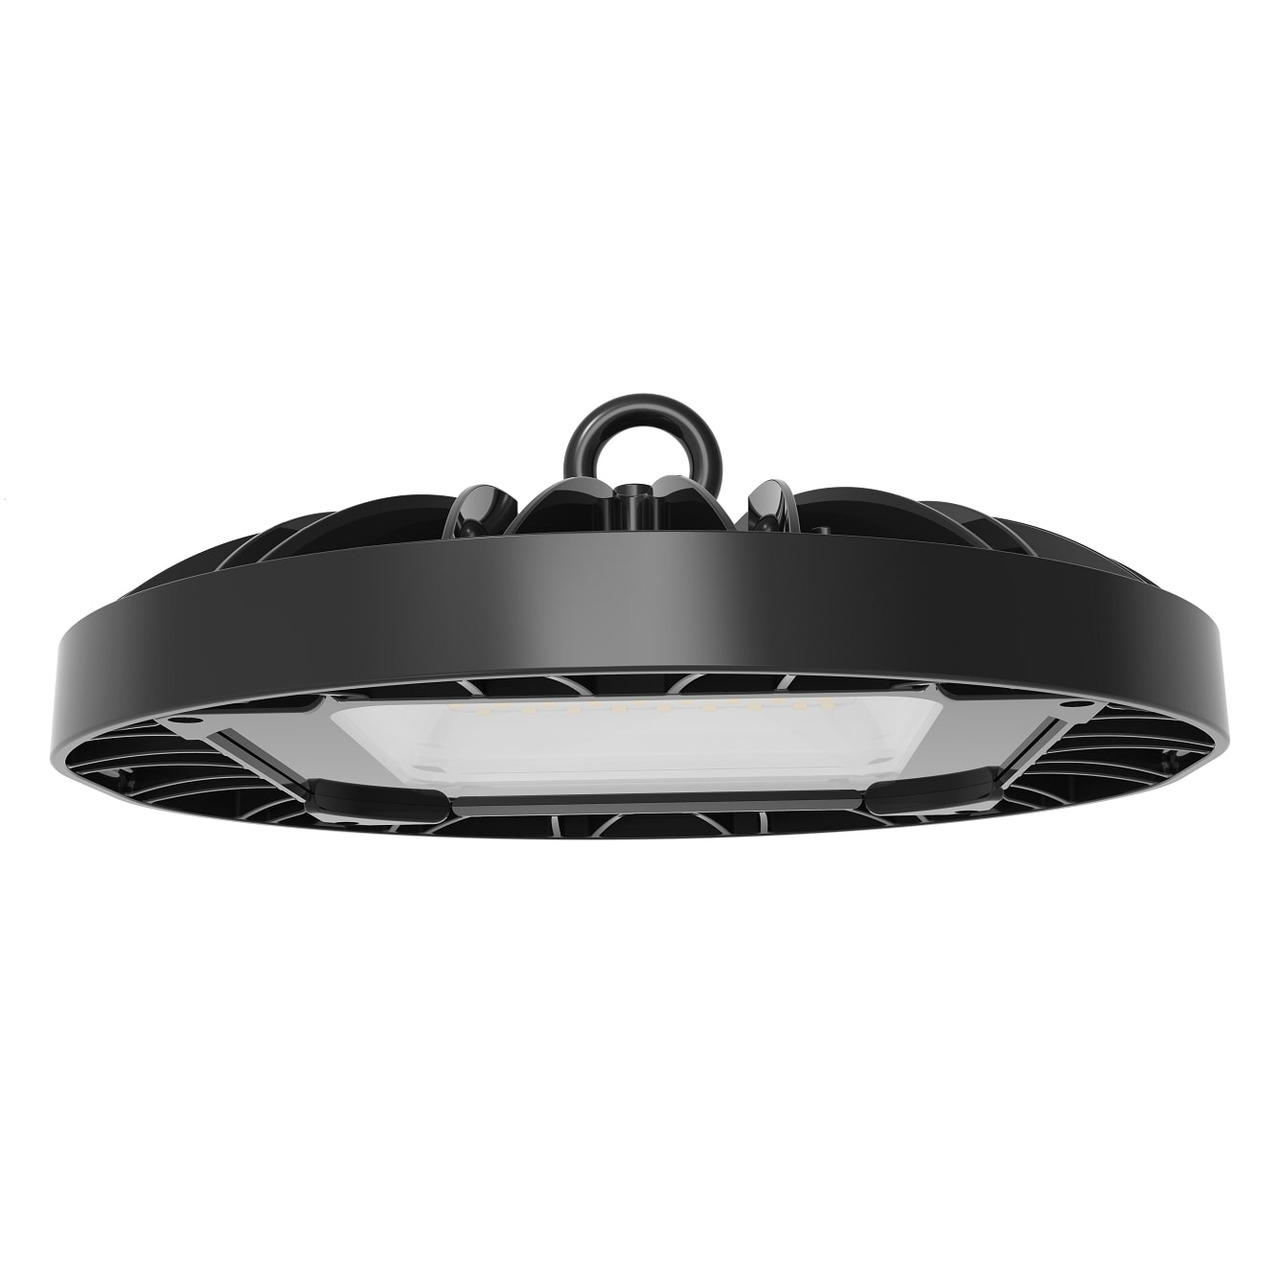 LUXULA 150-W-LED-Strahler UFO-HighBay 150- 14400 lm- 96 lm-W- 5000 K- neutralweiss- IP65